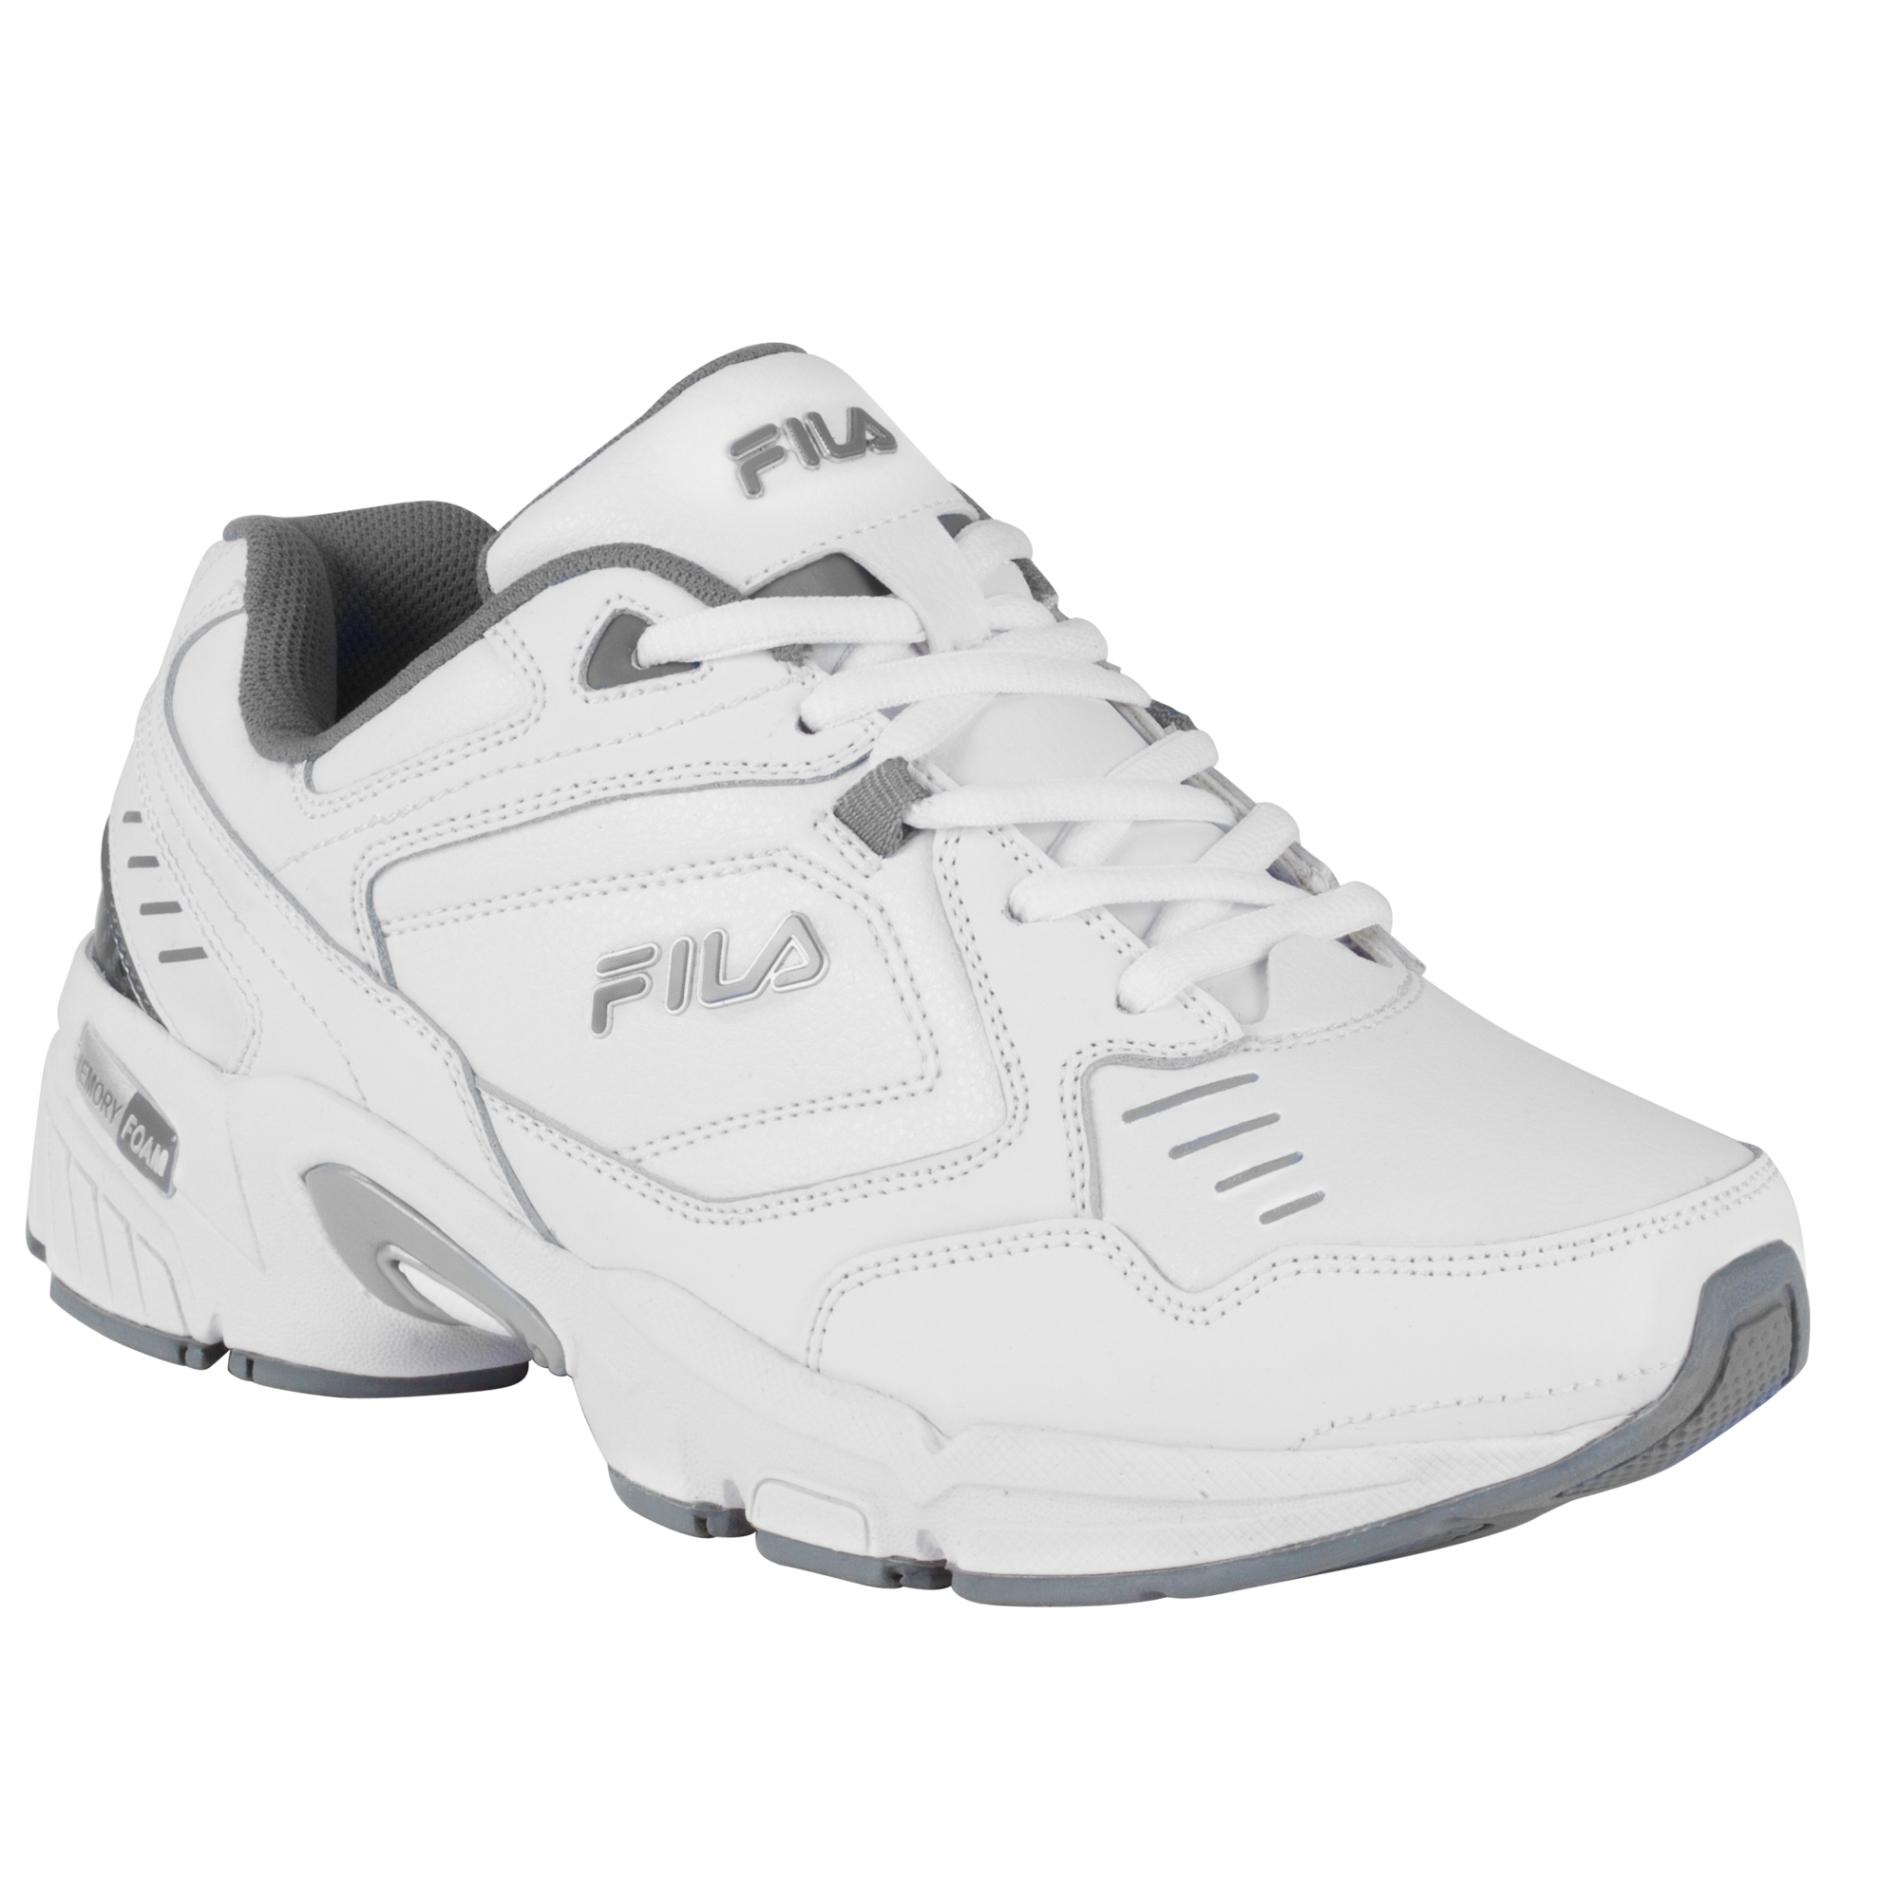 Fila Women's Memory Comfort Cross Training Shoe - White